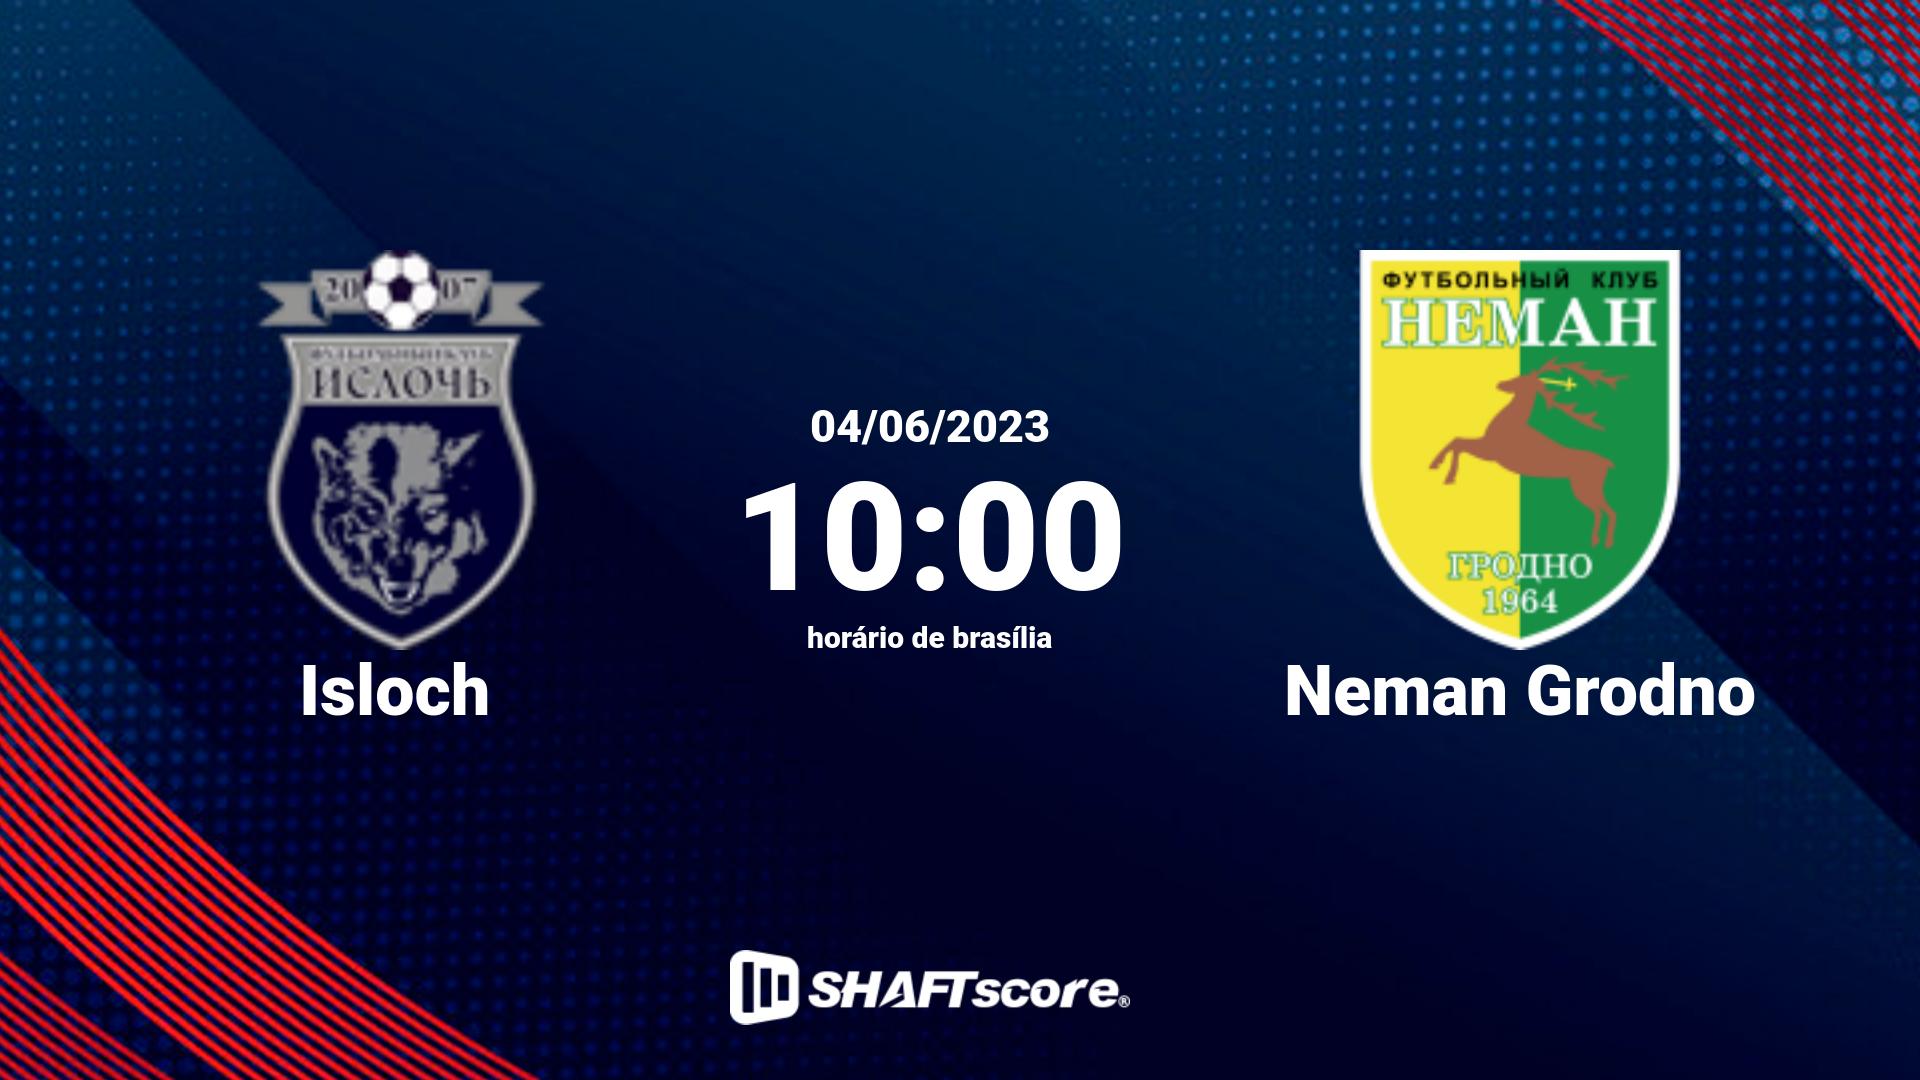 Estatísticas do jogo Isloch vs Neman Grodno 04.06 10:00